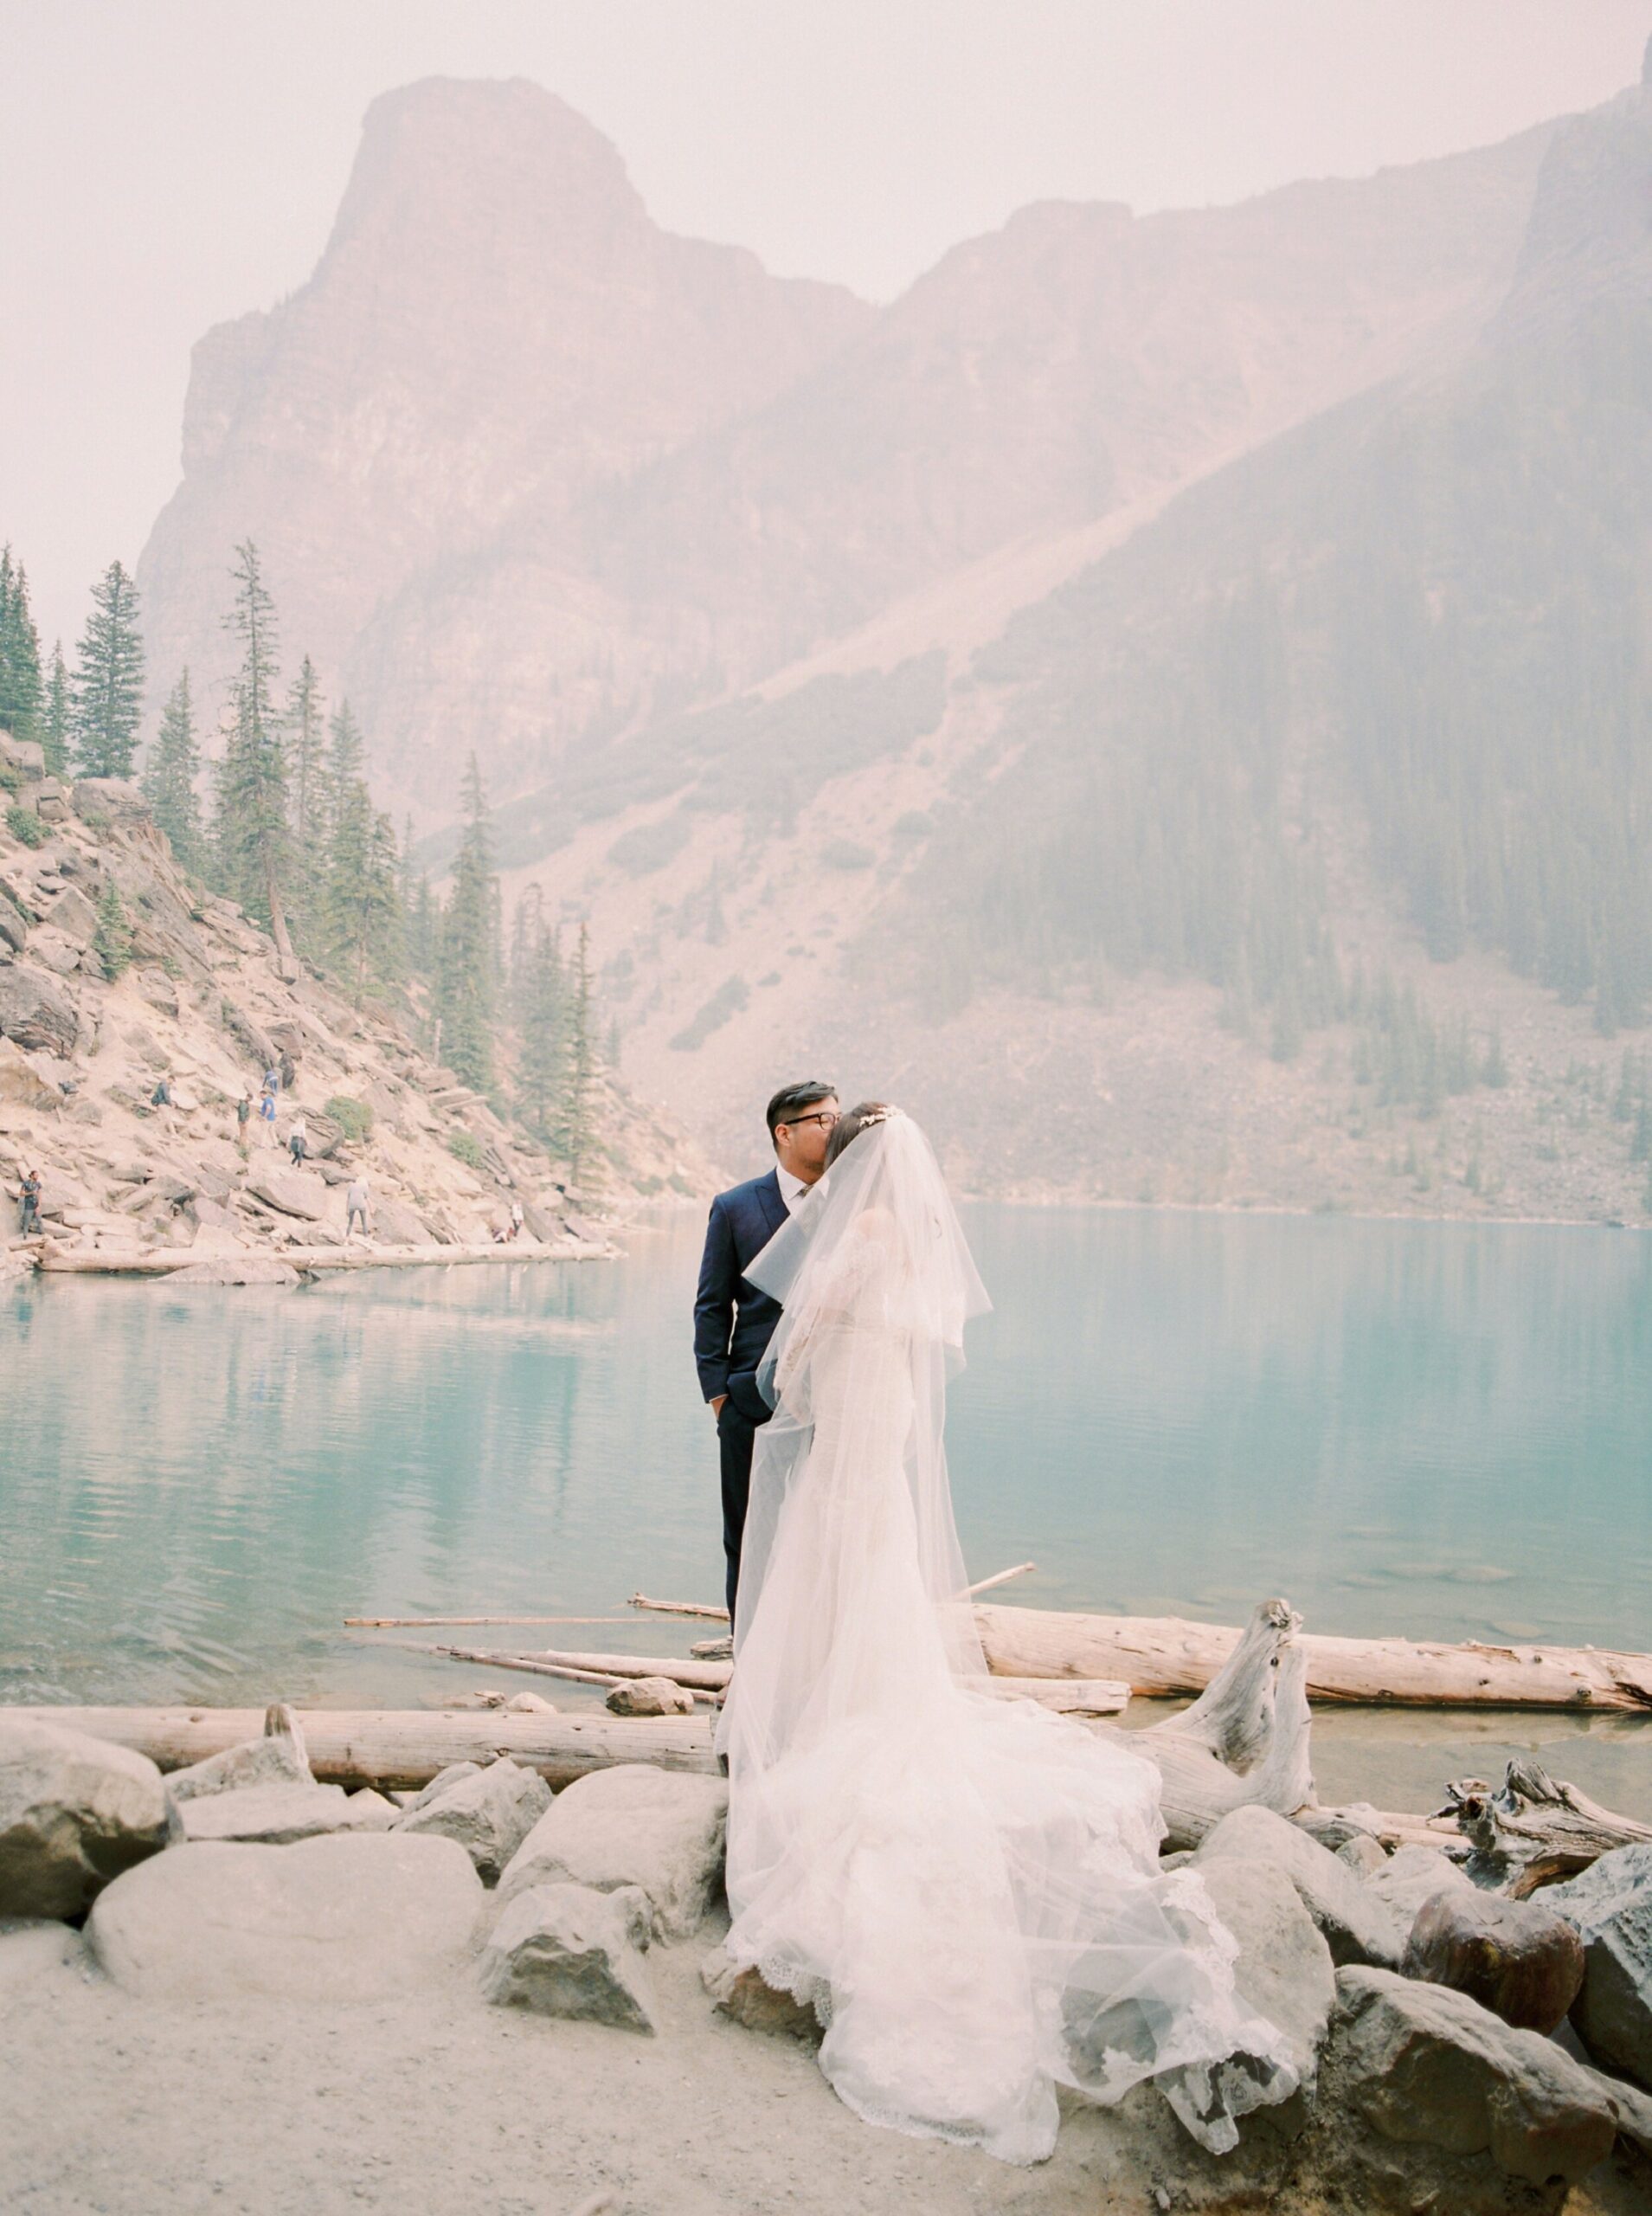  Lake Louise wedding photographers | Justine milton photography | fine art film destination wedding photographer | fairmont chateau lake louise bride and groom portrait 